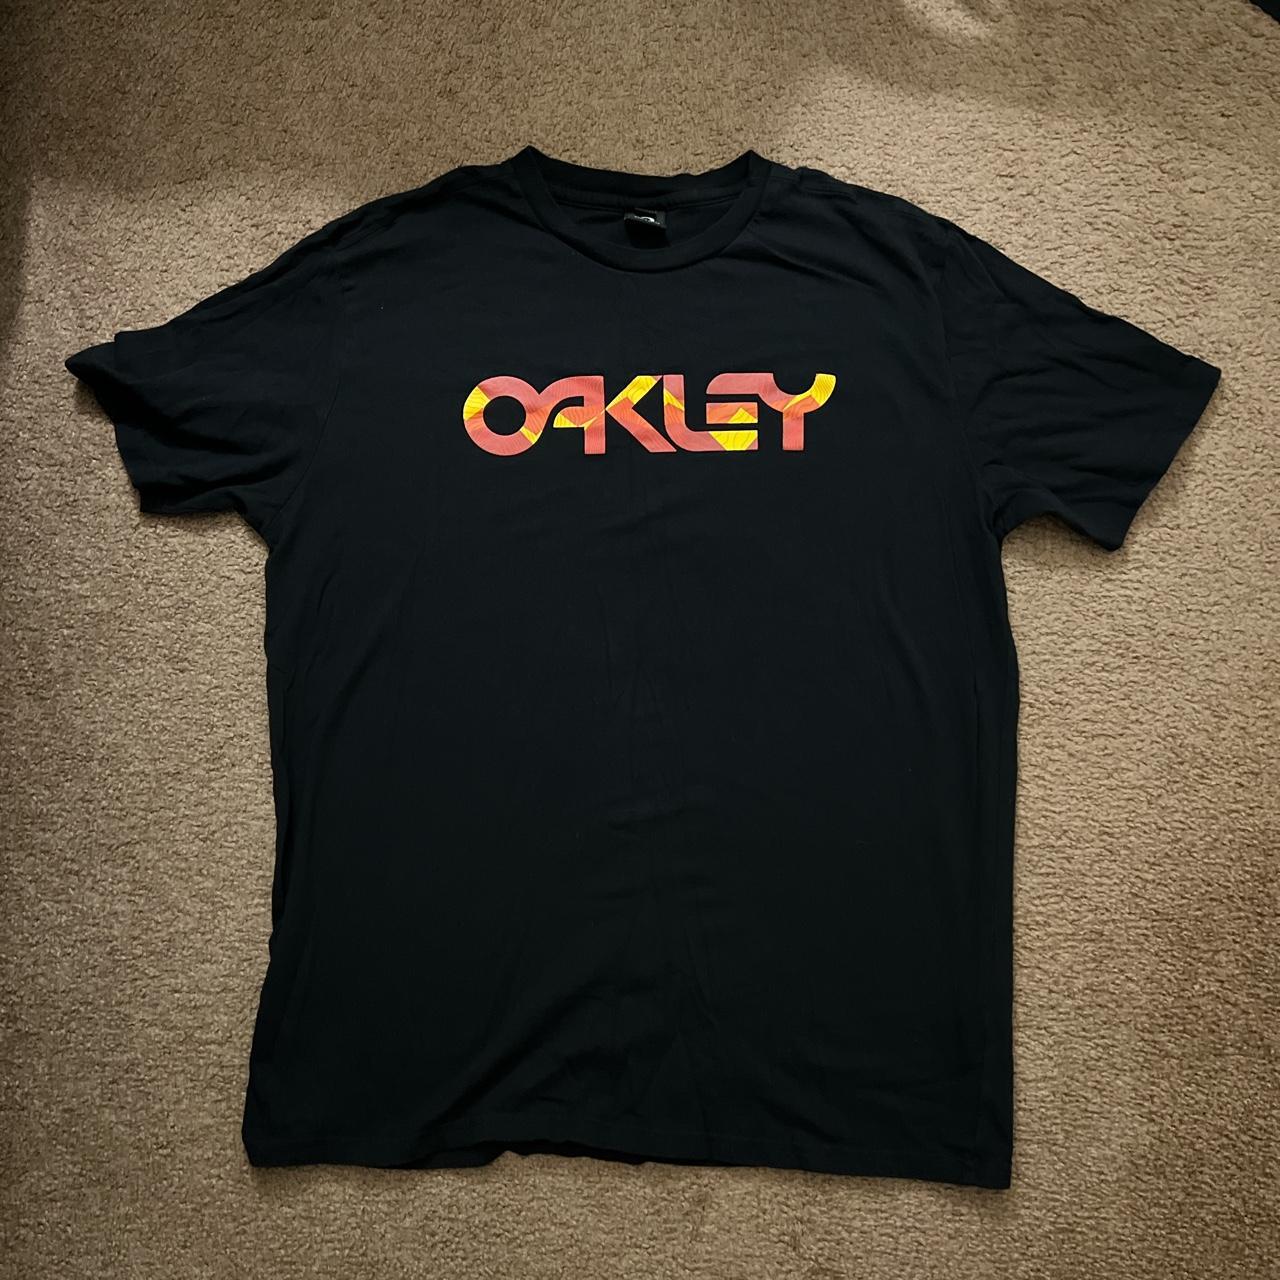 Oakley Men's Black and Orange T-shirt